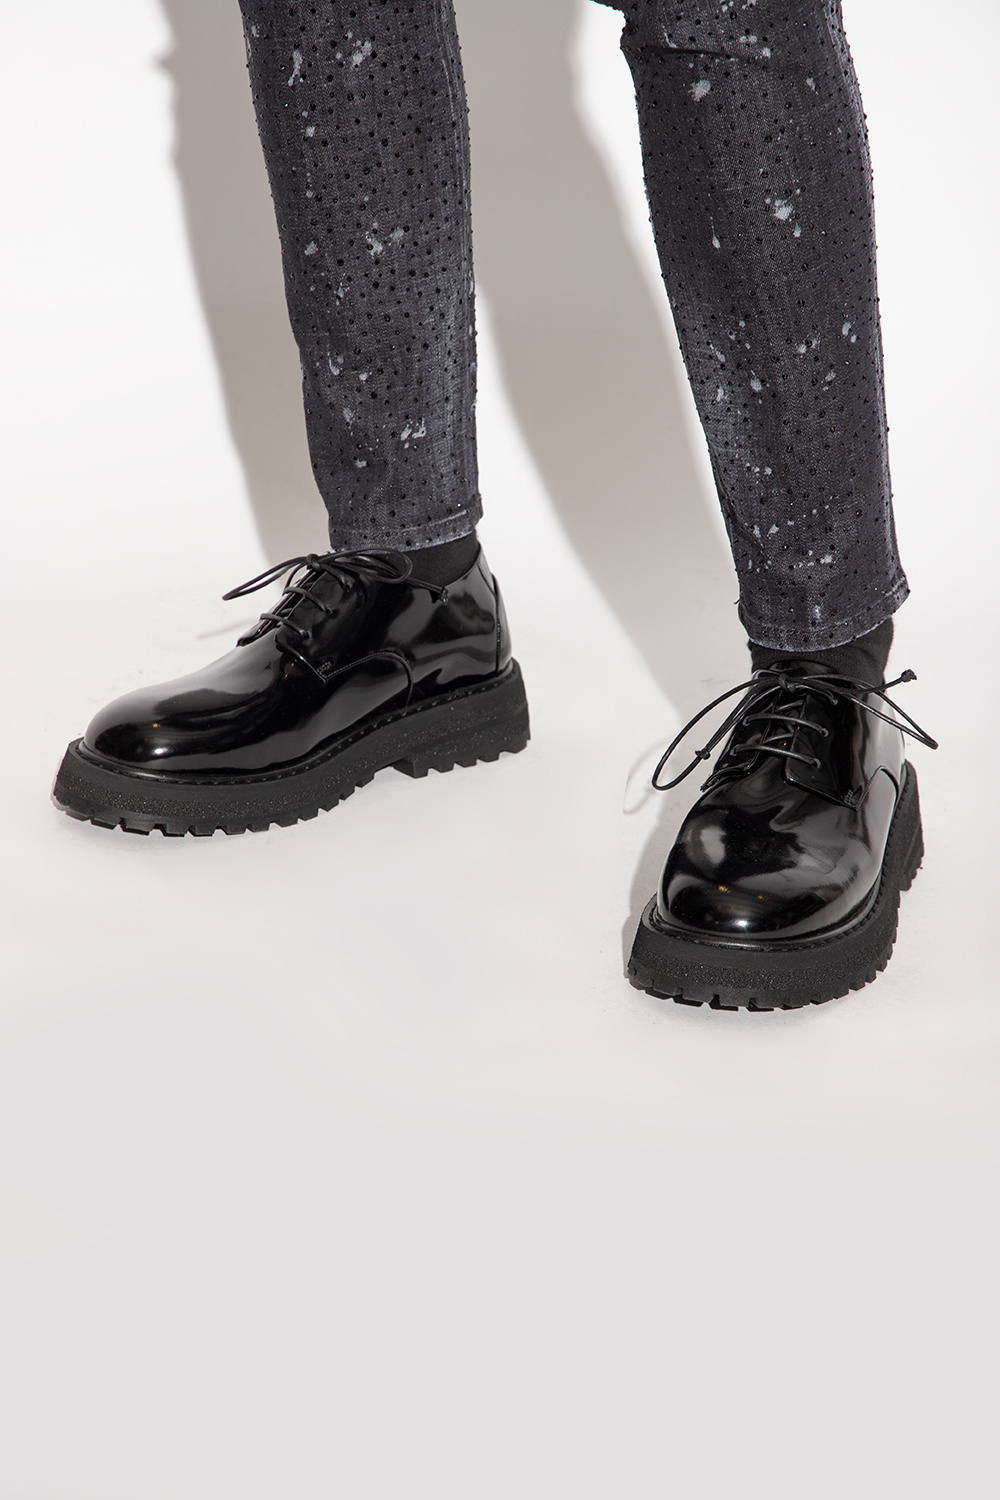 IetpShops Australia - Black 'Carro' Derby shoes Marsell - adidas originals  Forum Low Shoes Unisex Leisure Skate Wear-resistant Light GX1422